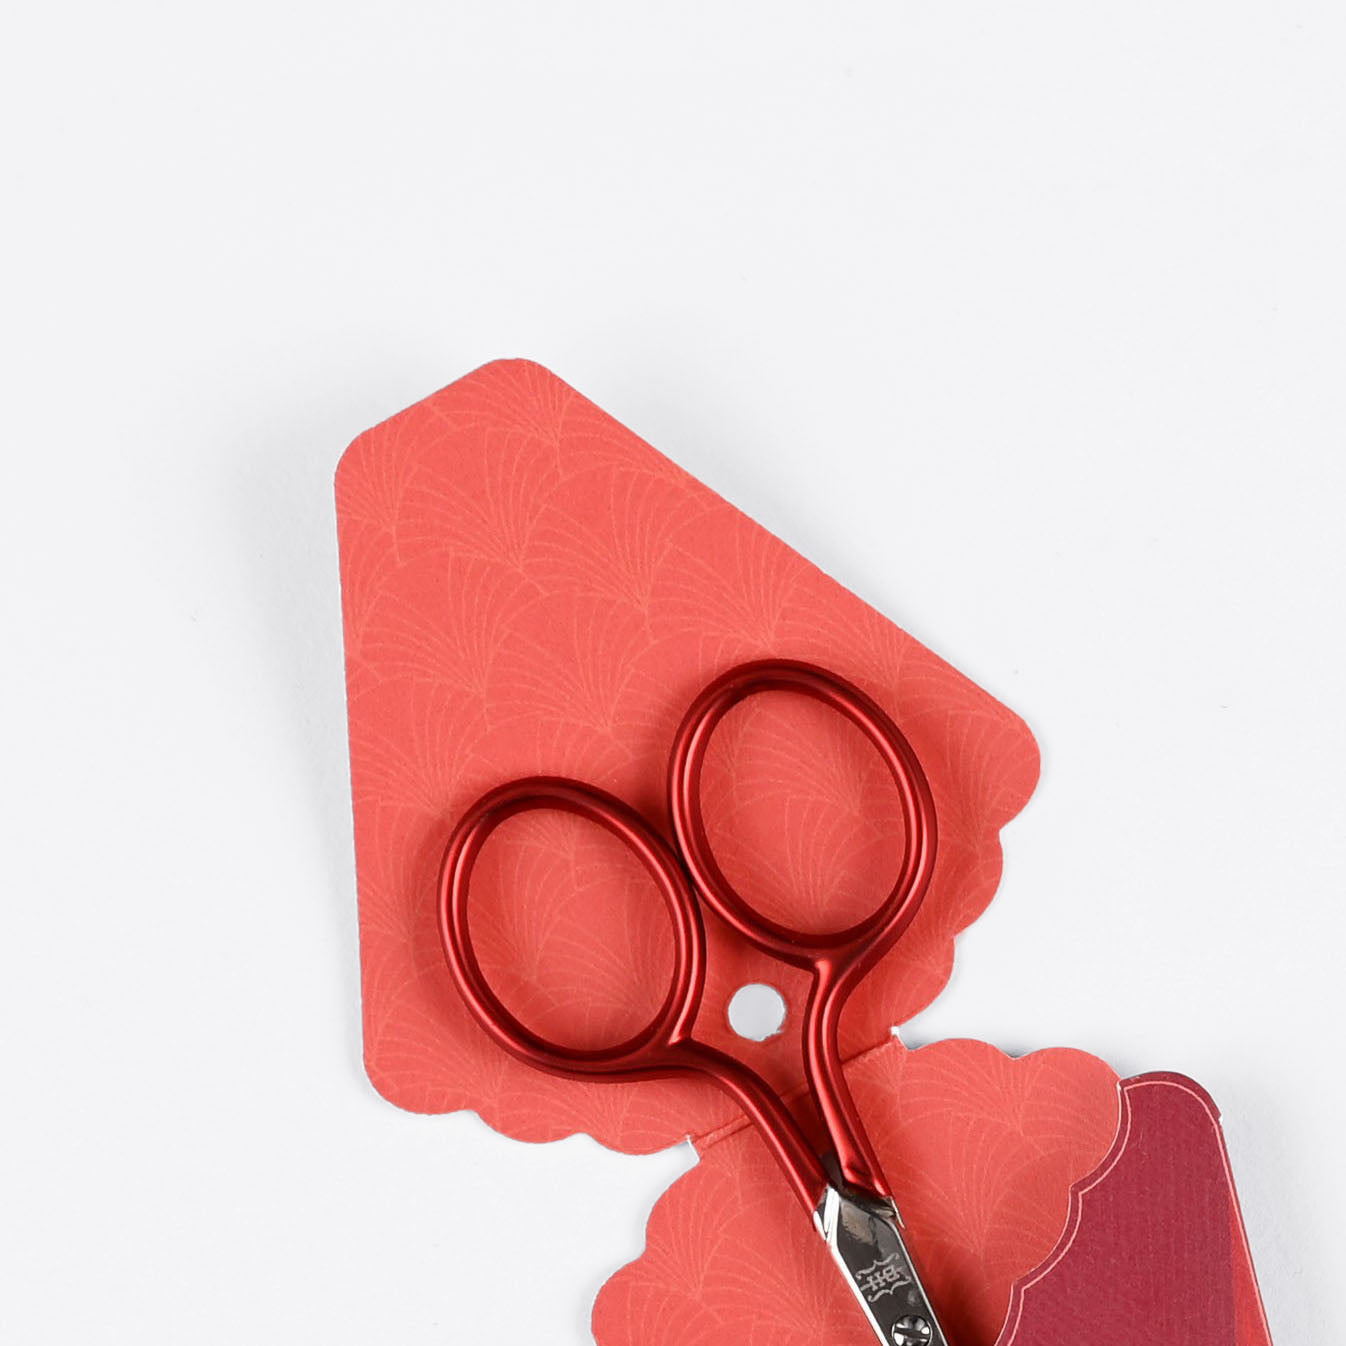 Brooklyn Haberdashery Snappy Red Scissors 